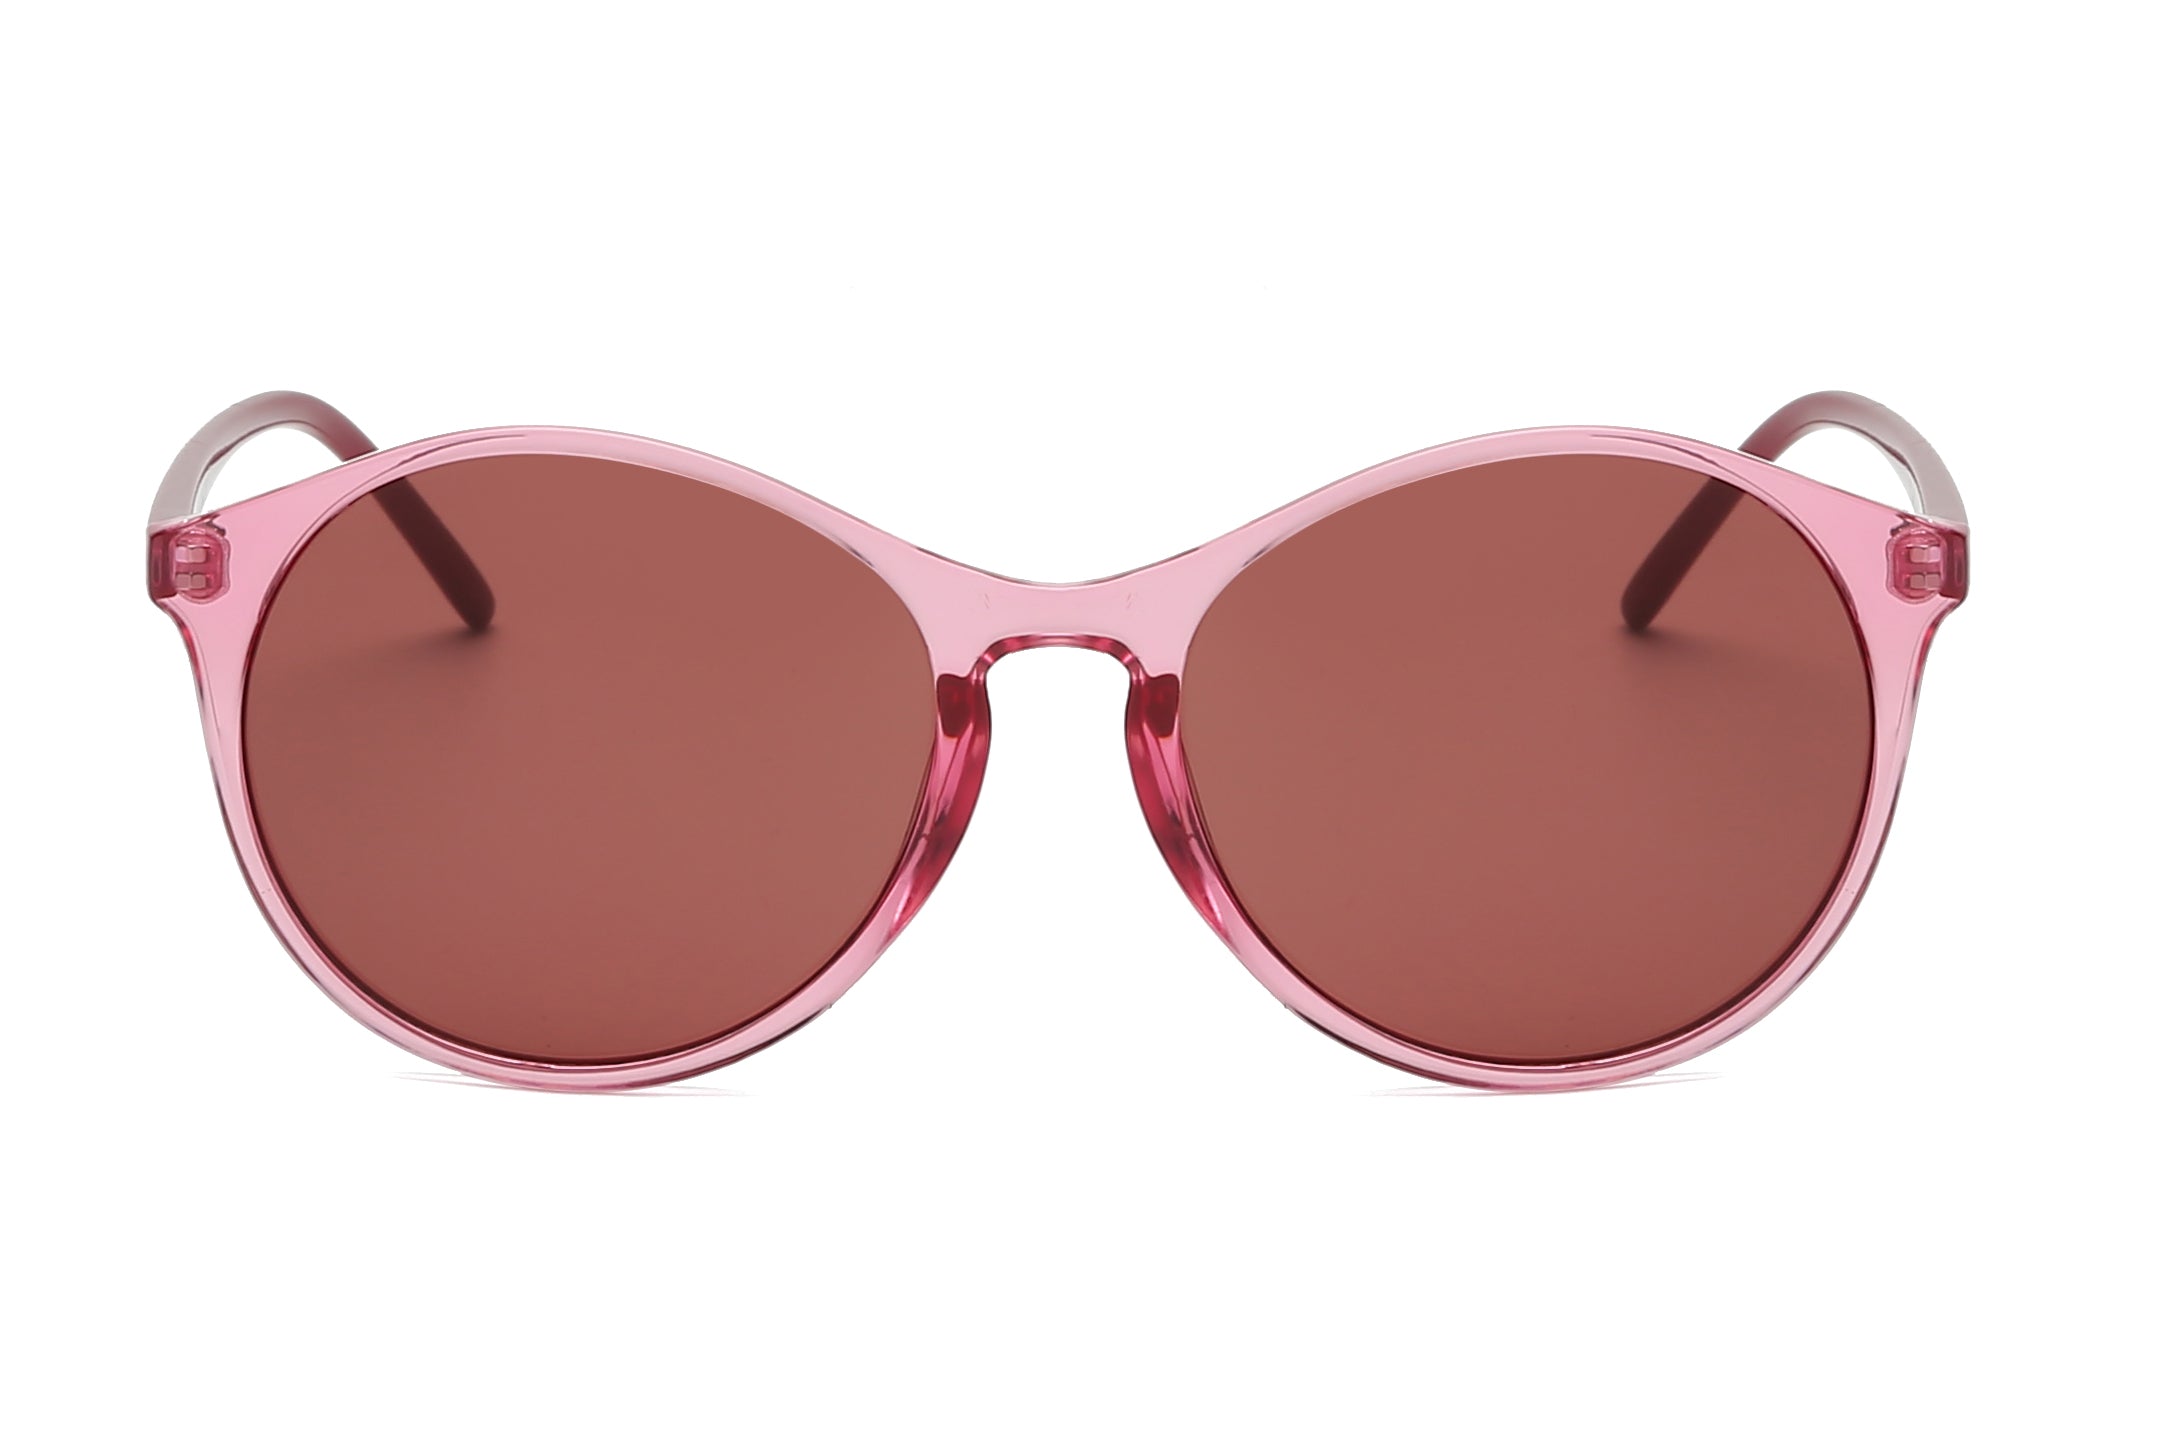 S1129 - Women Round Fashion Sunglasses Assorted/Mixed